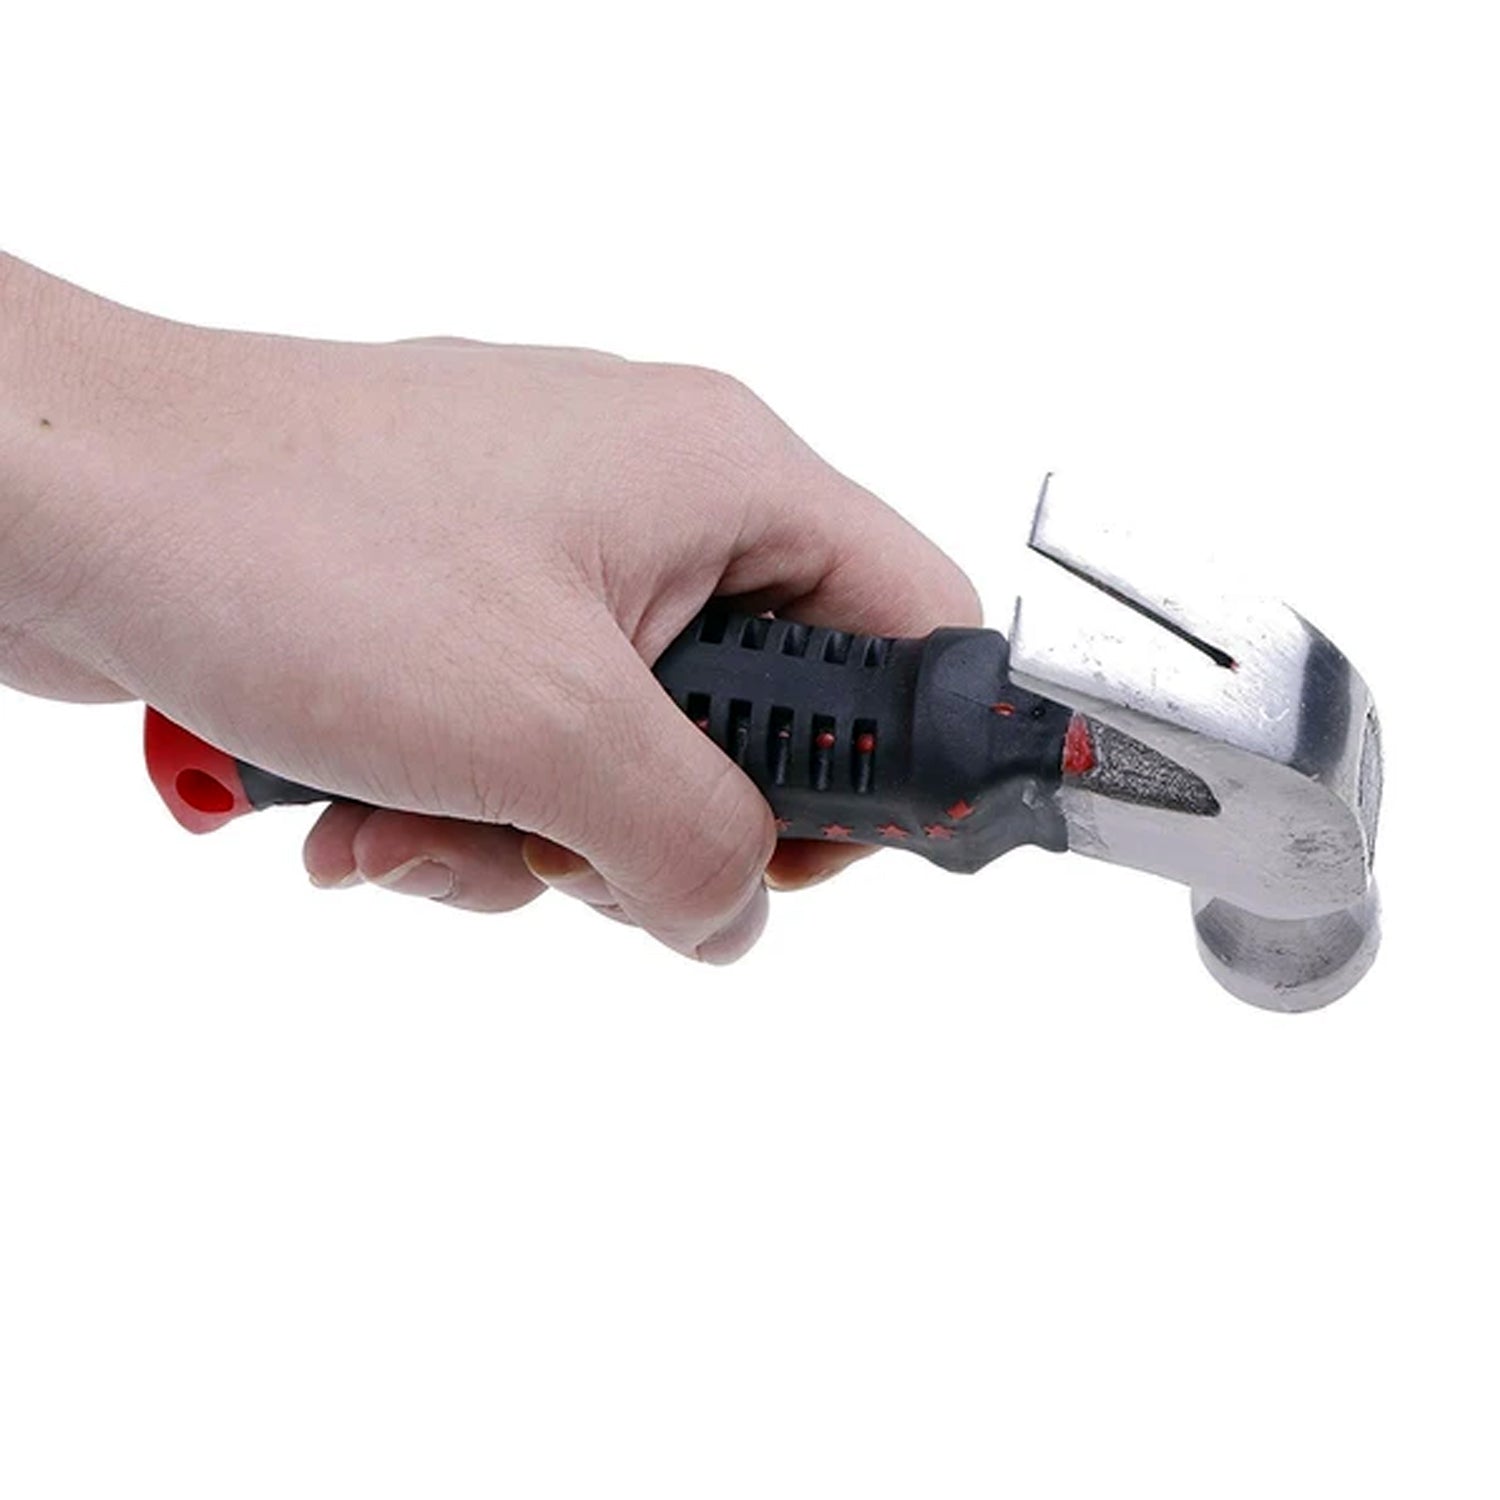 462 Carpenter Mini Claw Hammer 